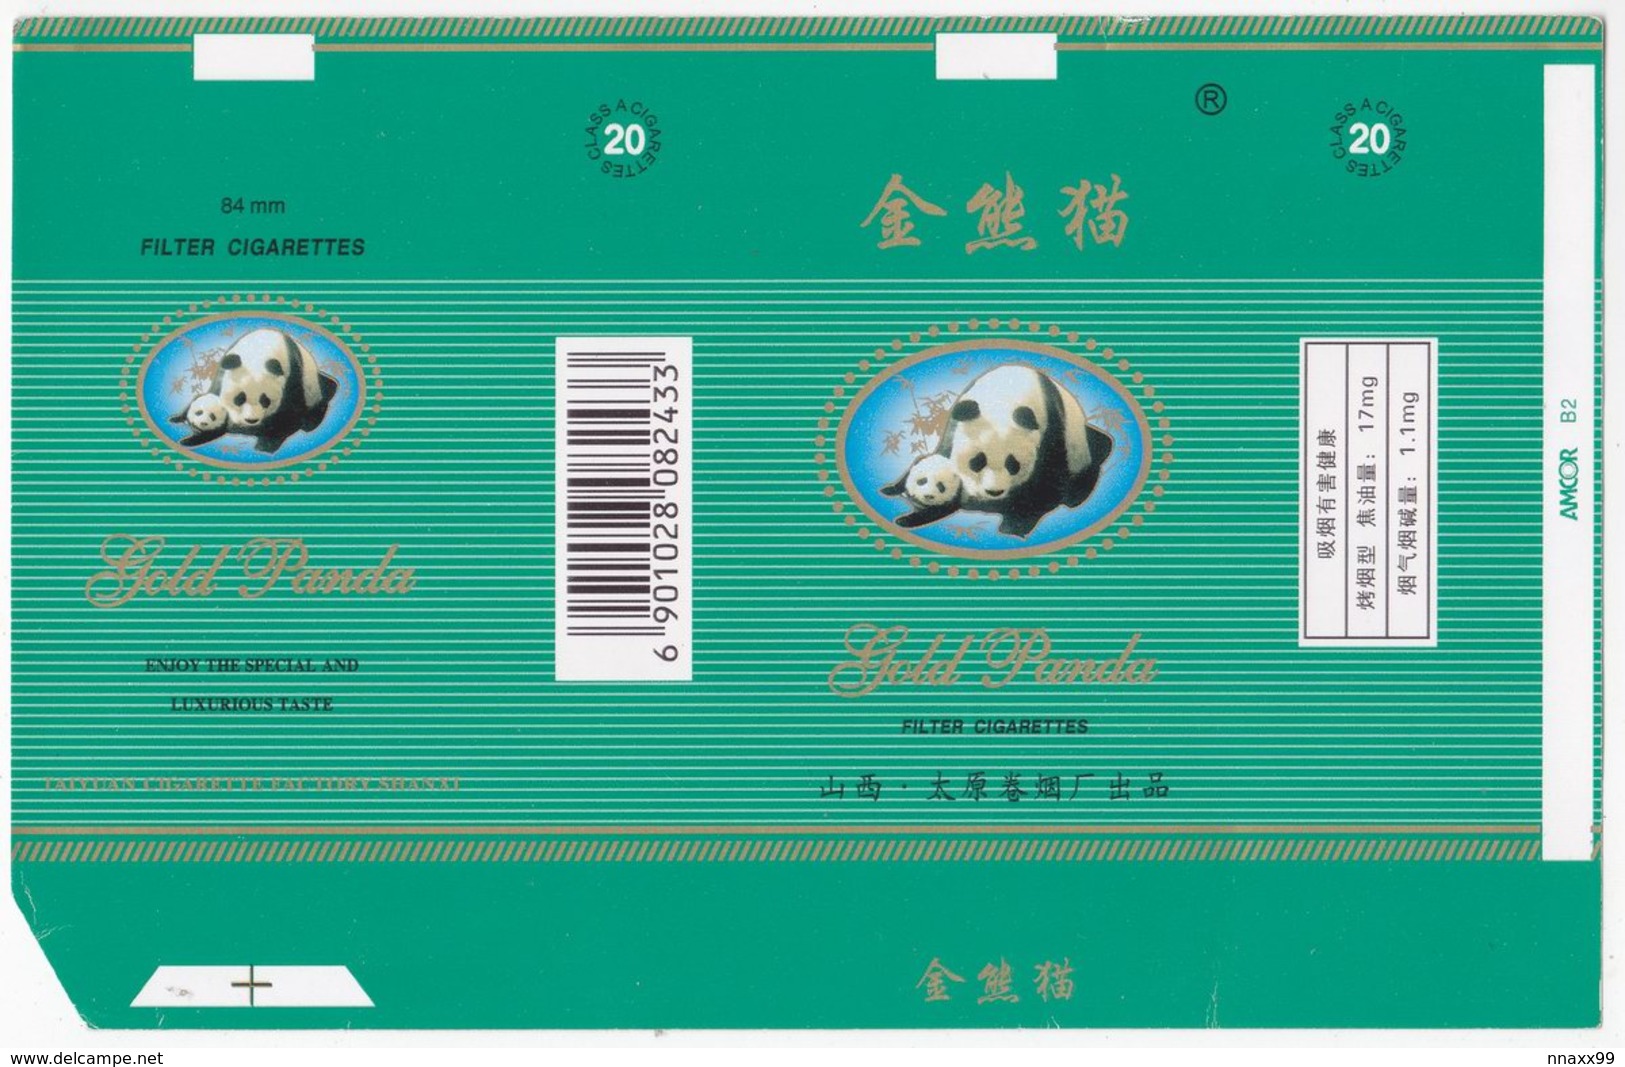 Panda - Giant Panda, GOLD PANDA Cigarette Box, Soft, Sea-GN Inlaid WT-thread, Taiyuan Cigarette Factory, Shanxi, China - Estuches Para Cigarrillos (vacios)